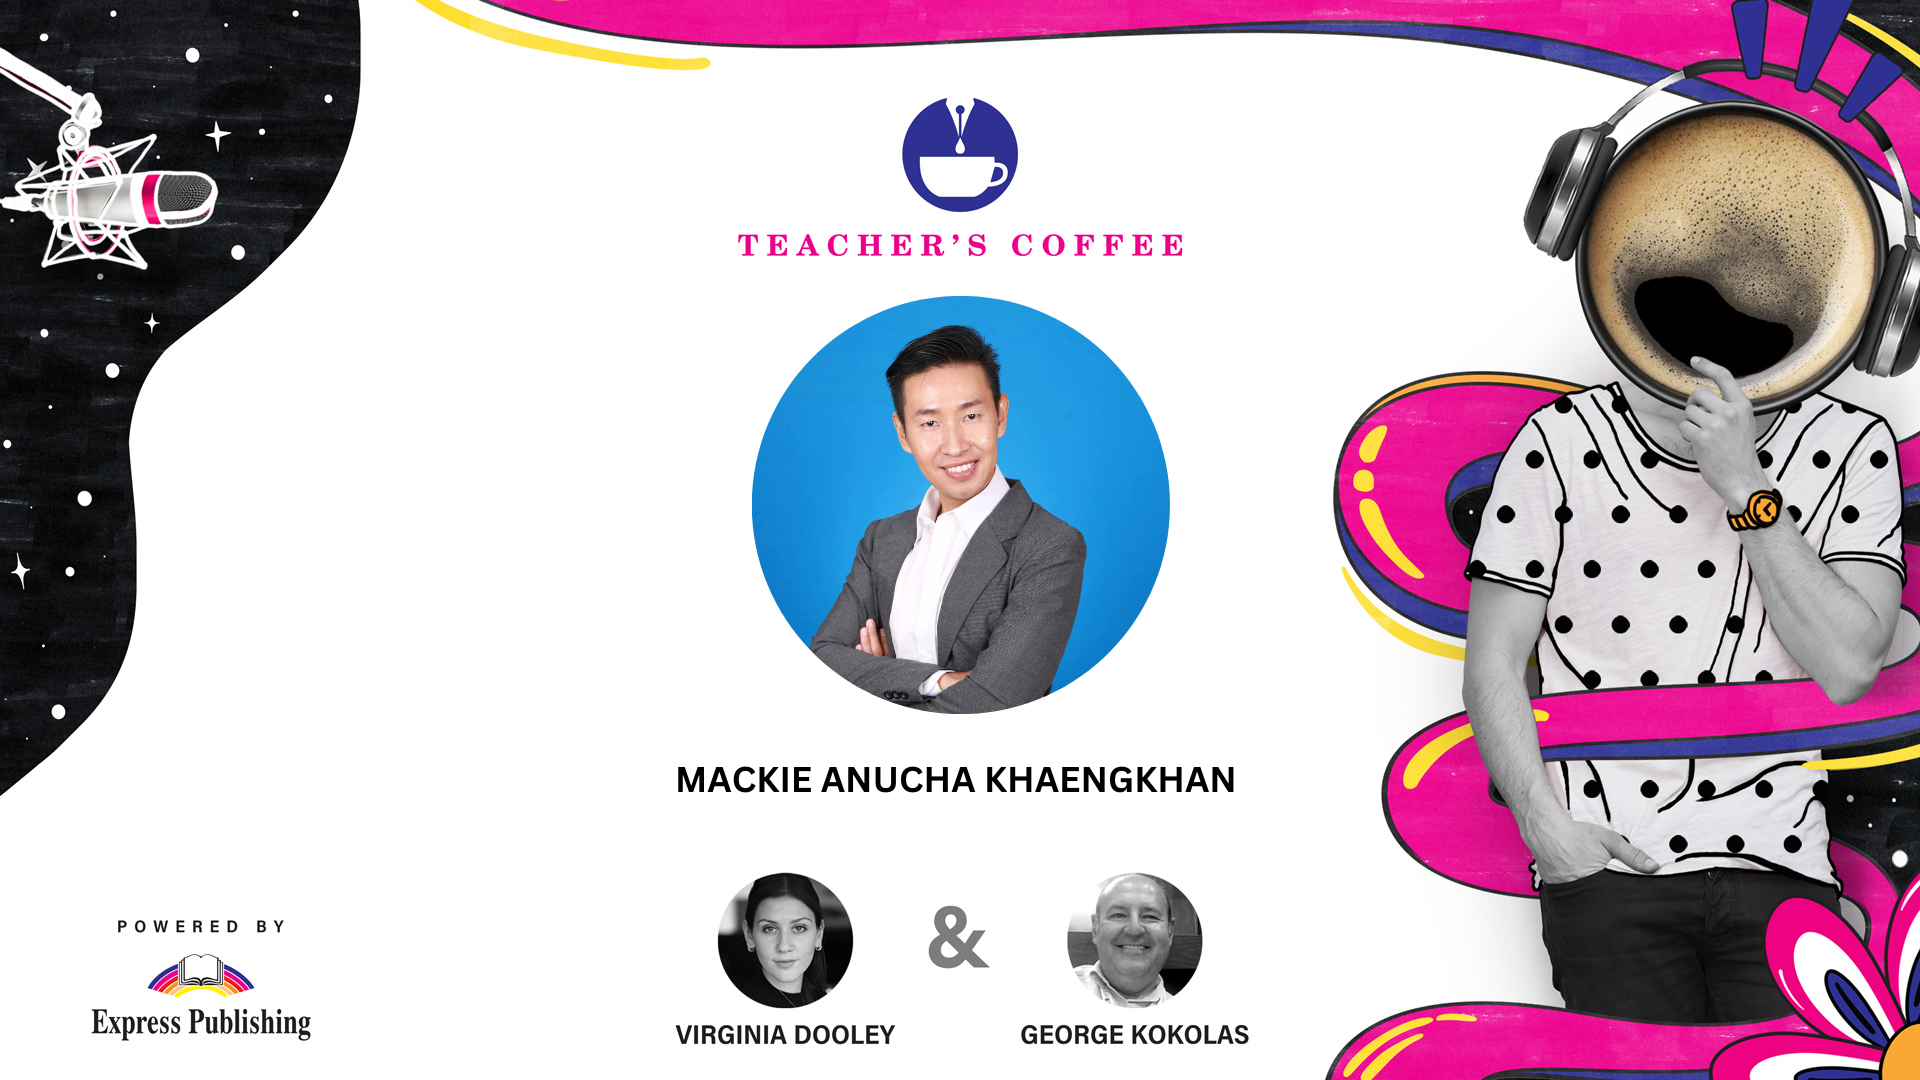 S07E10 Teacher's Coffee with Mackie Anucha Khaengkhan